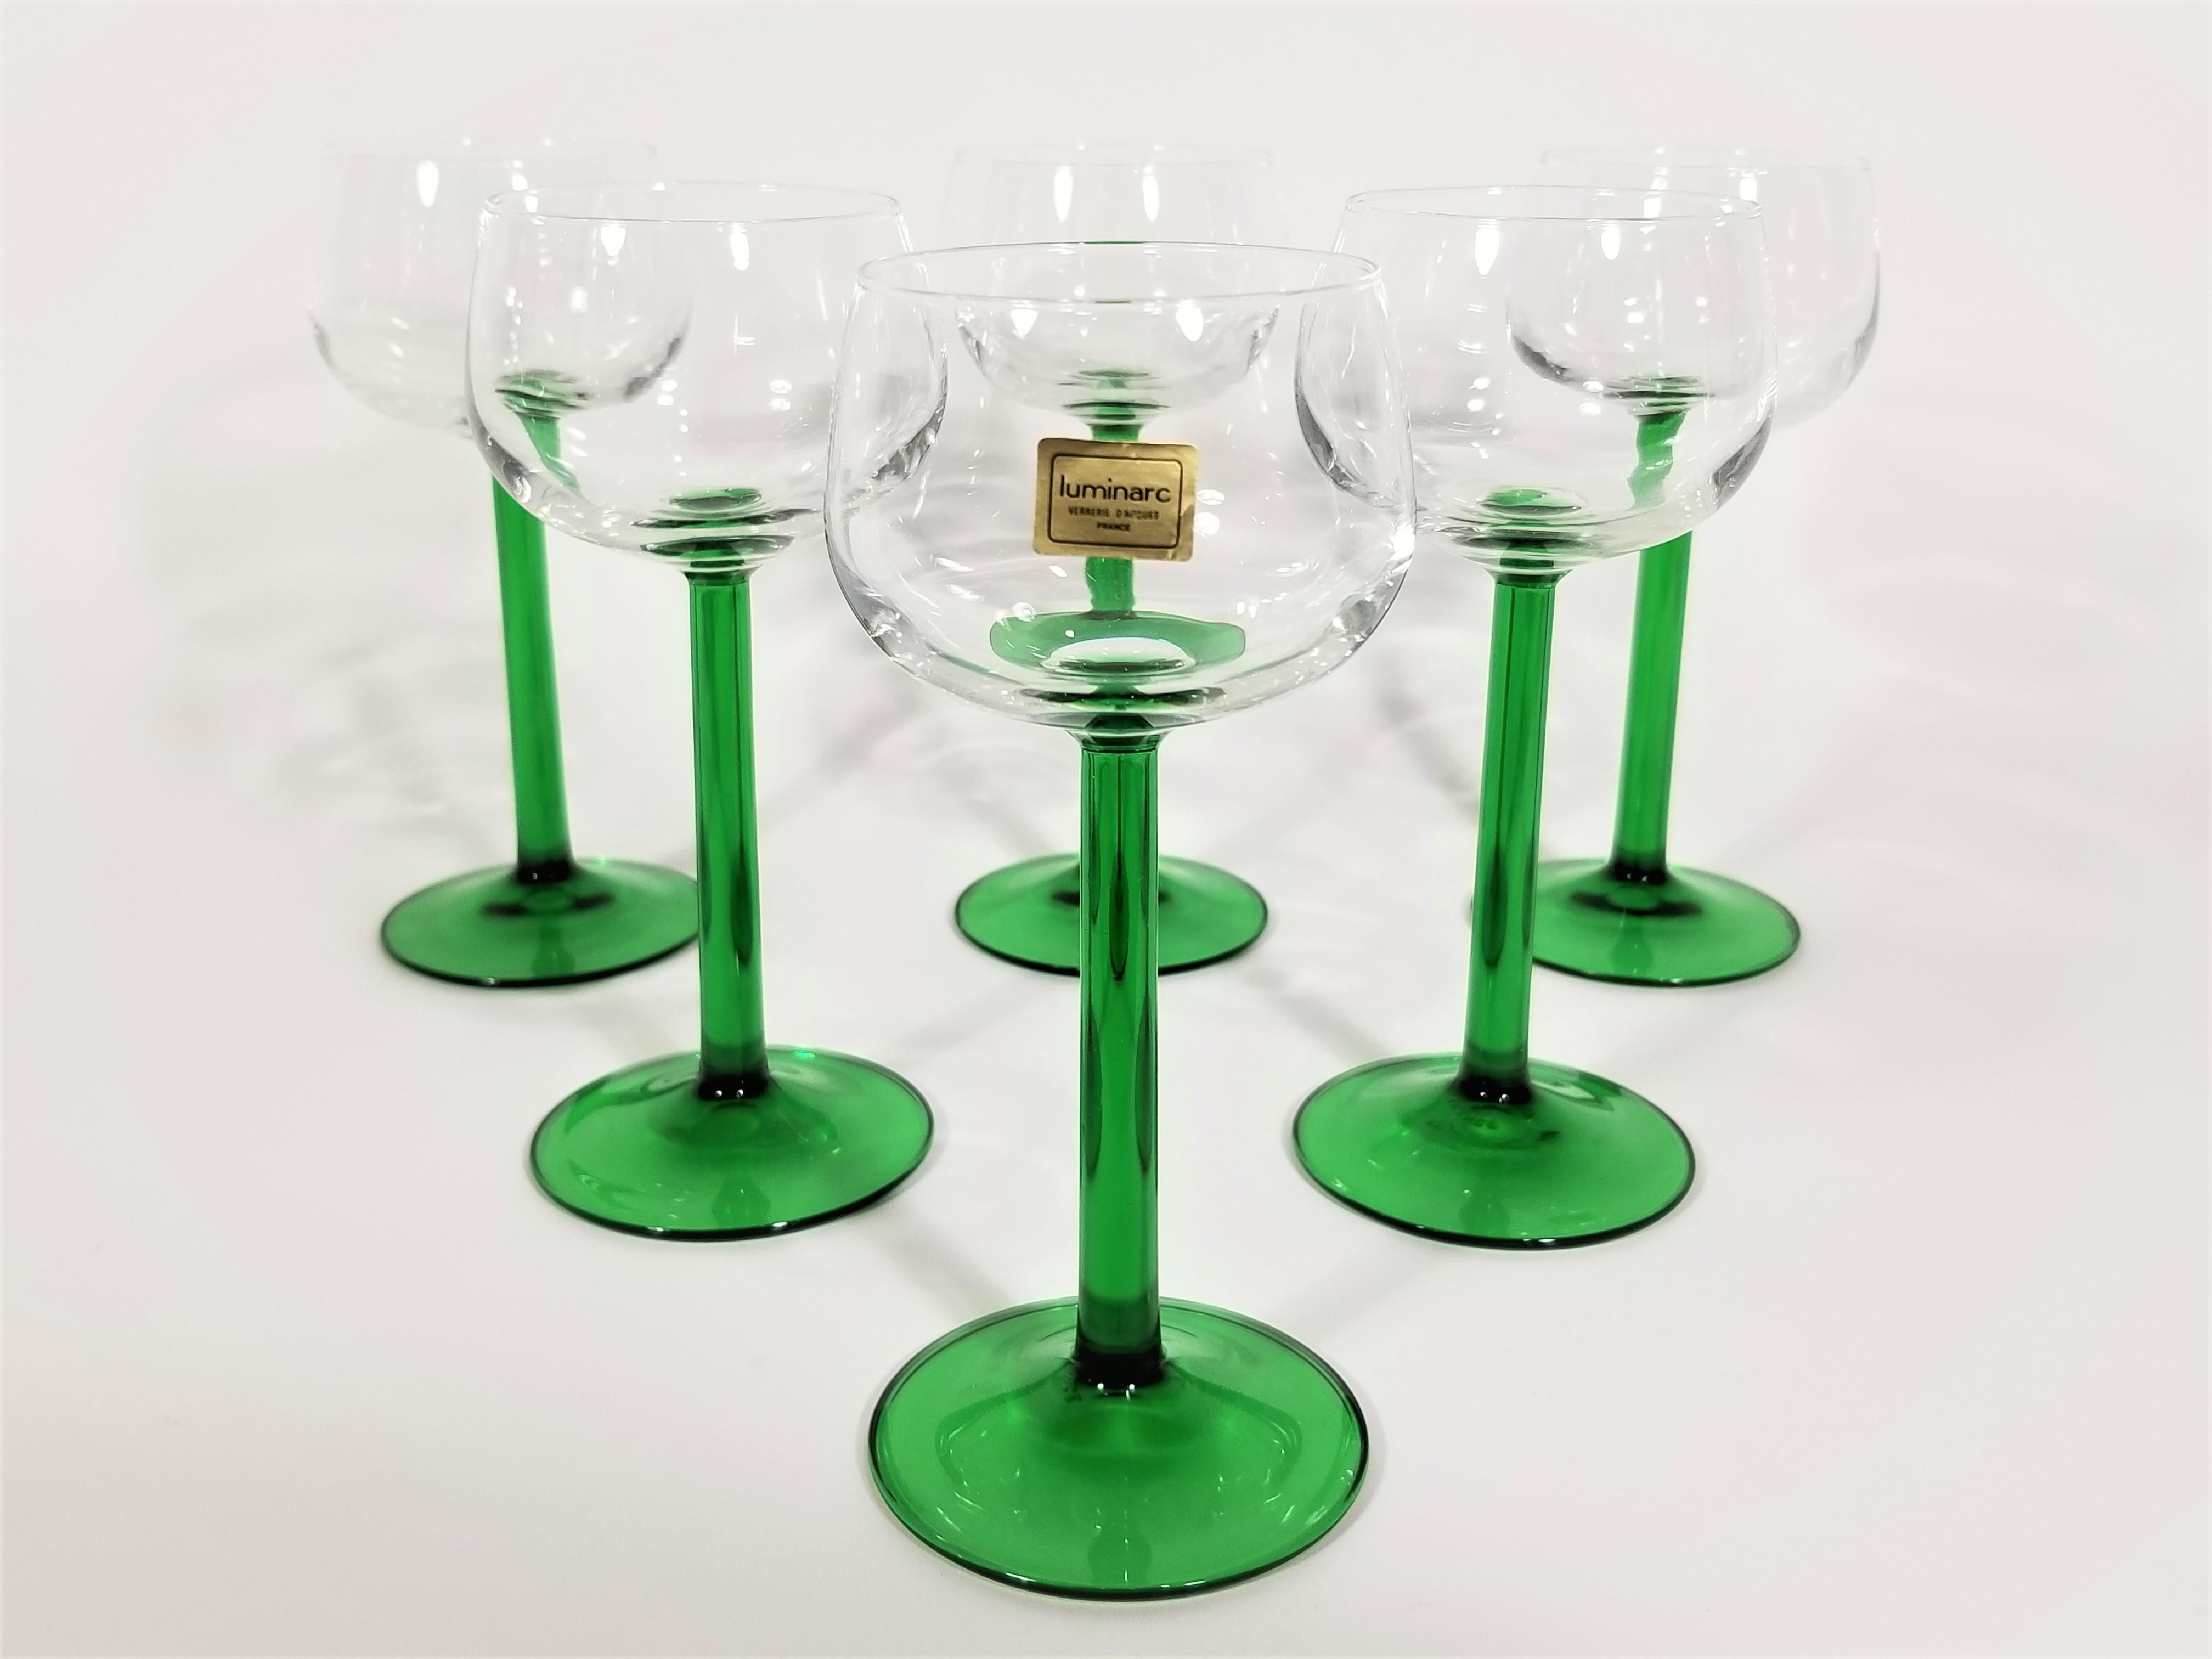 French Luminarc glassware stemware. All glasses marked France on bottom. Mid century 1970s. Green jewel green tulip stems. One glass still retains original Luminarc marking sticker.